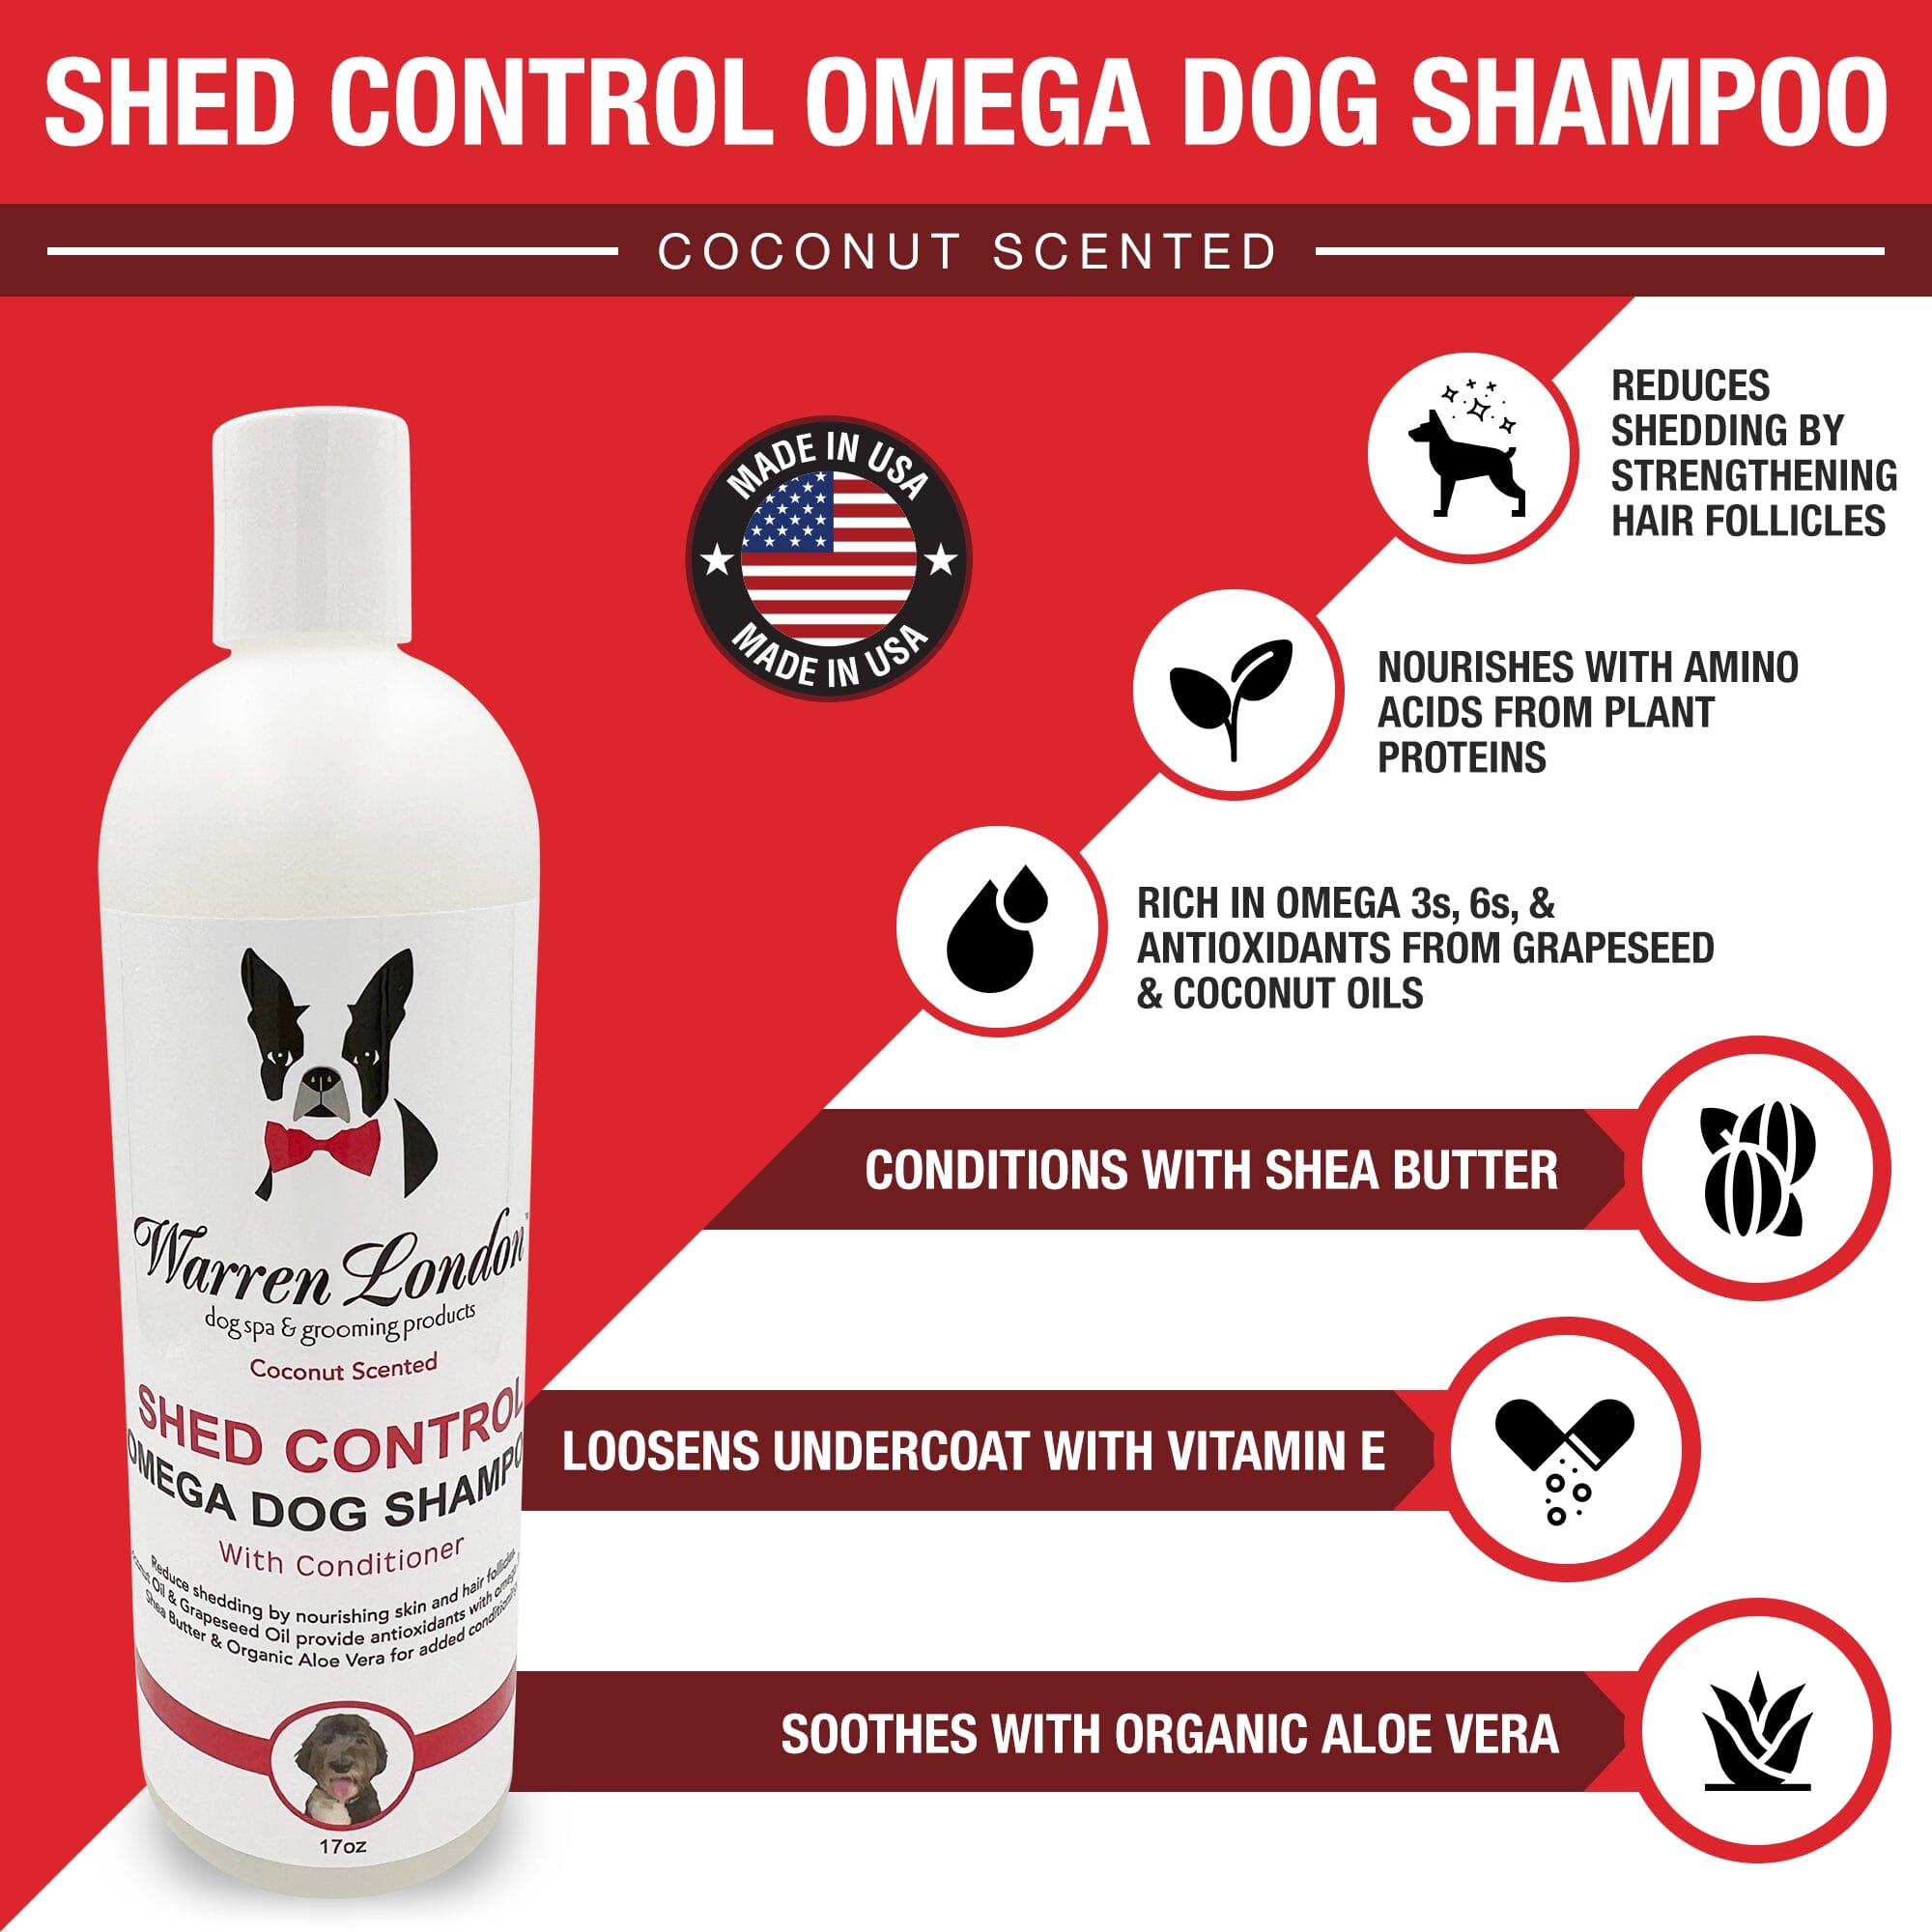 Shed Control Shampoo for Dogs Dog Shampoo Warren London 